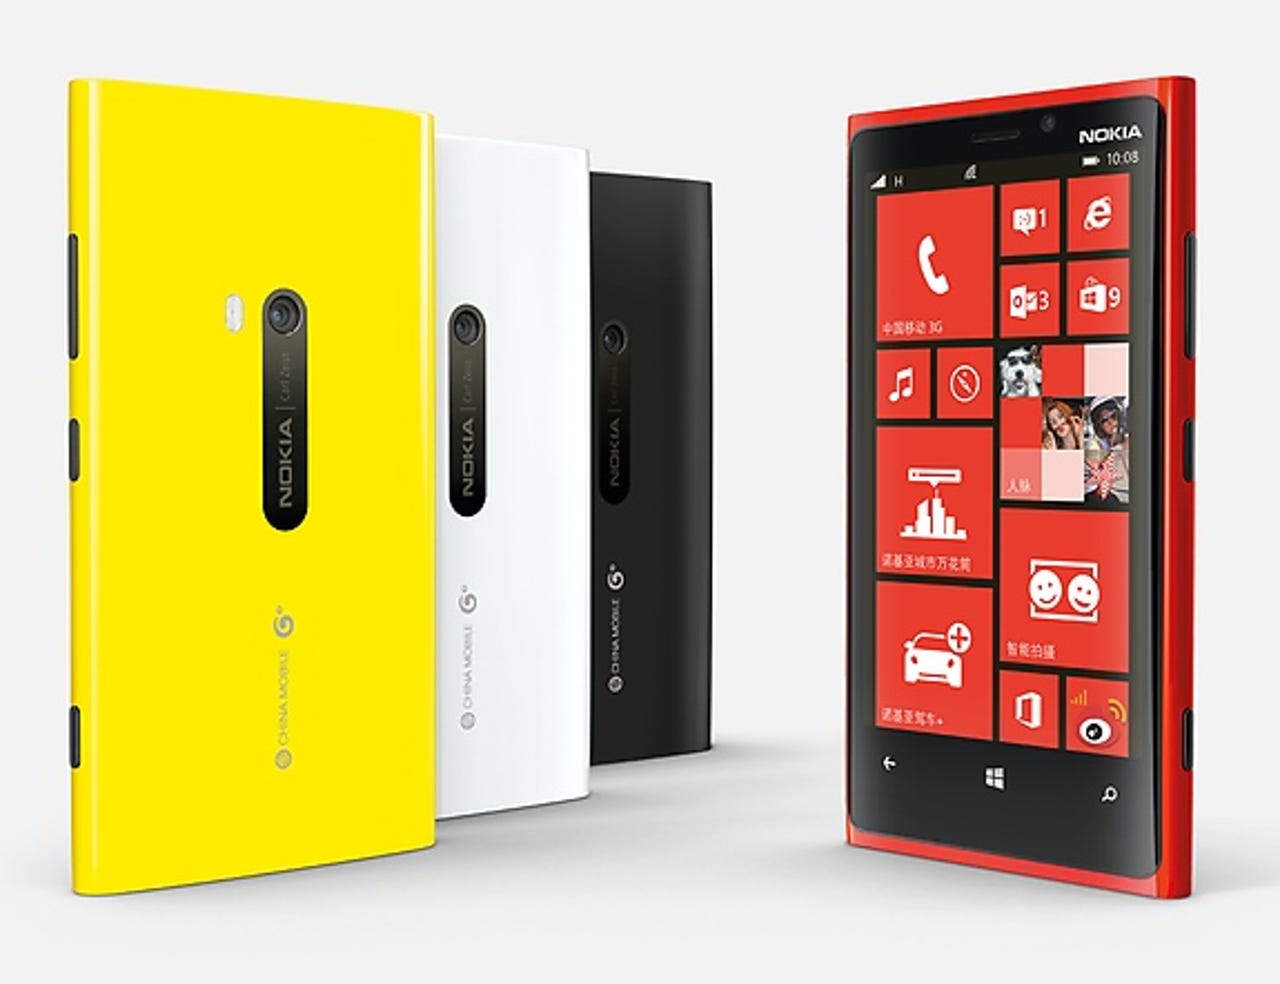 Lumia 920T